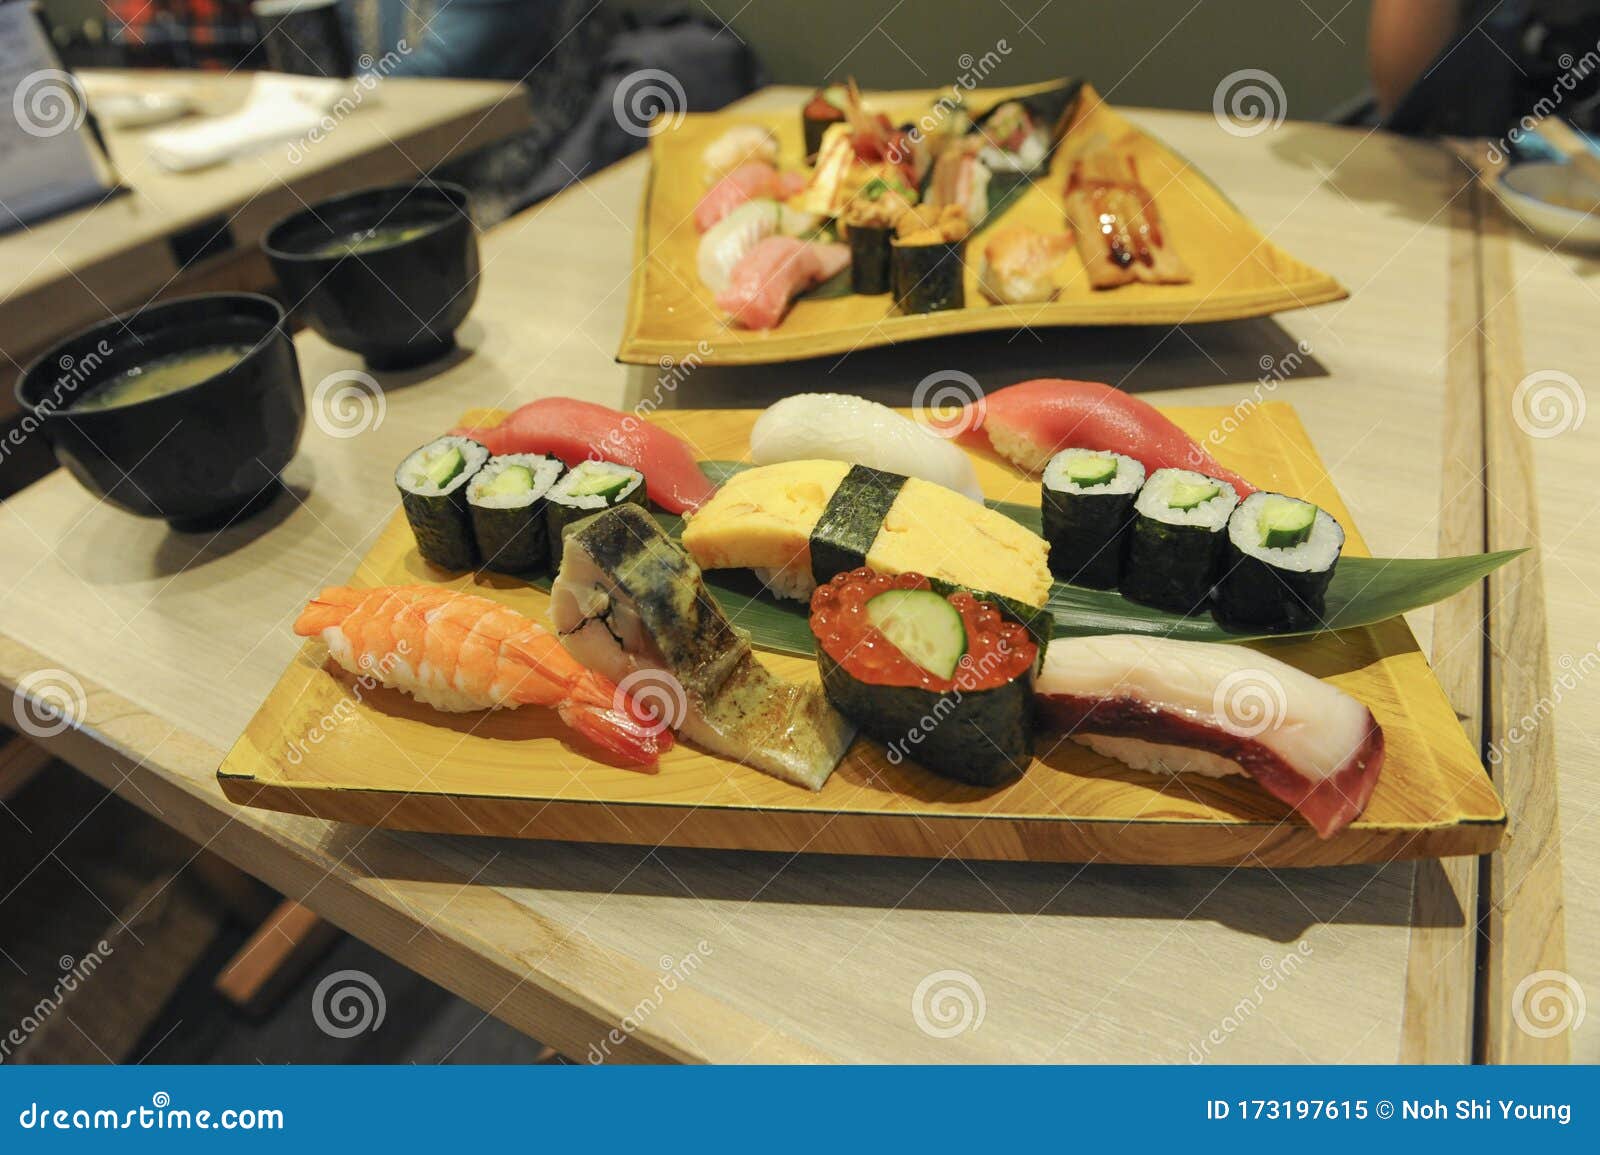 Tokyo Ginza Midori Sushi Stock Image Image Of Famous